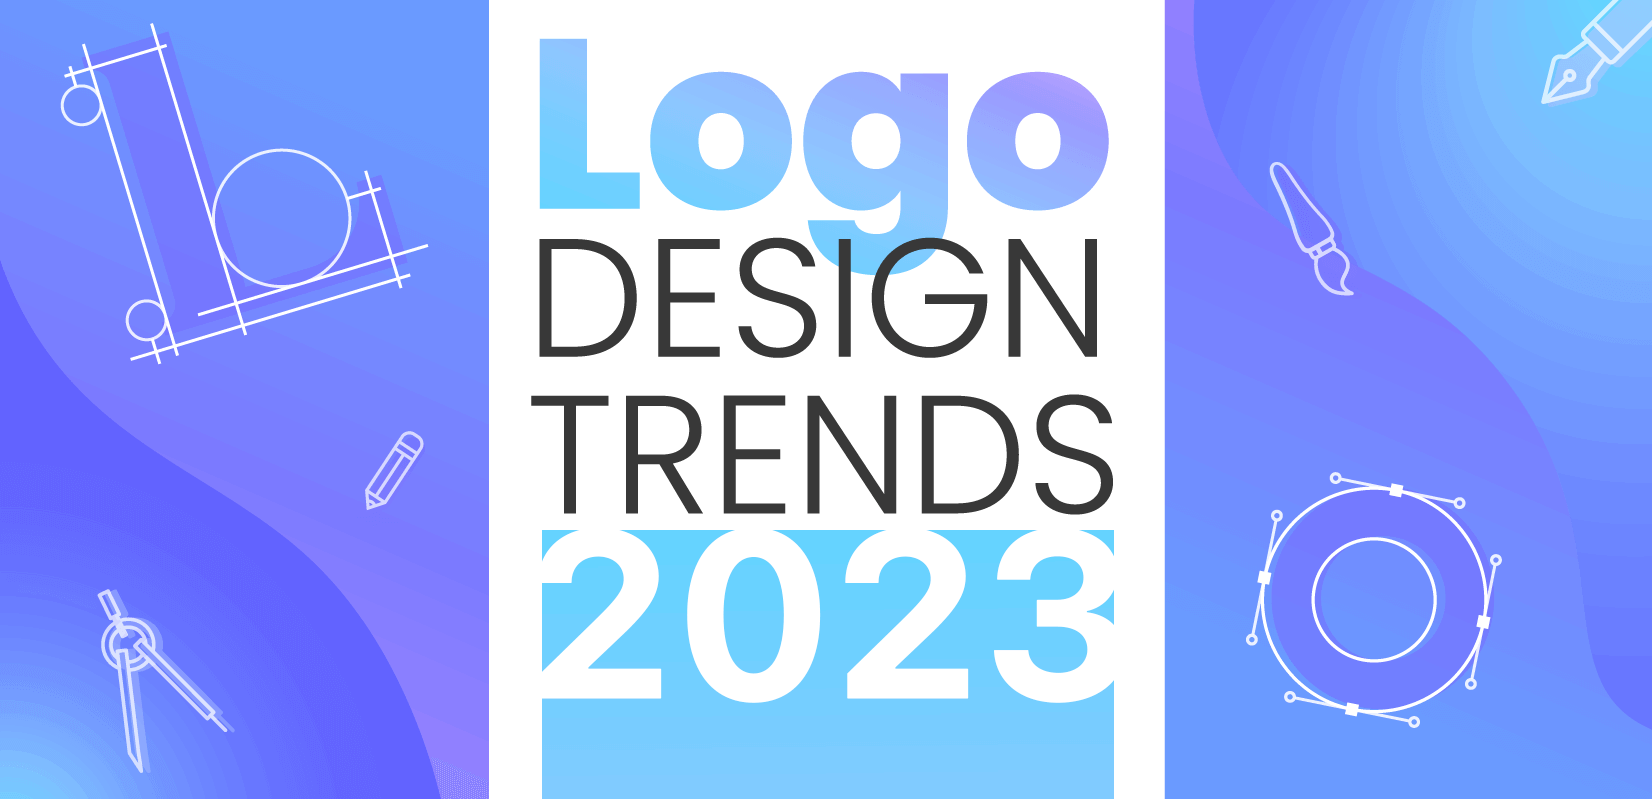 Best Luxury Logo Designs of 2023